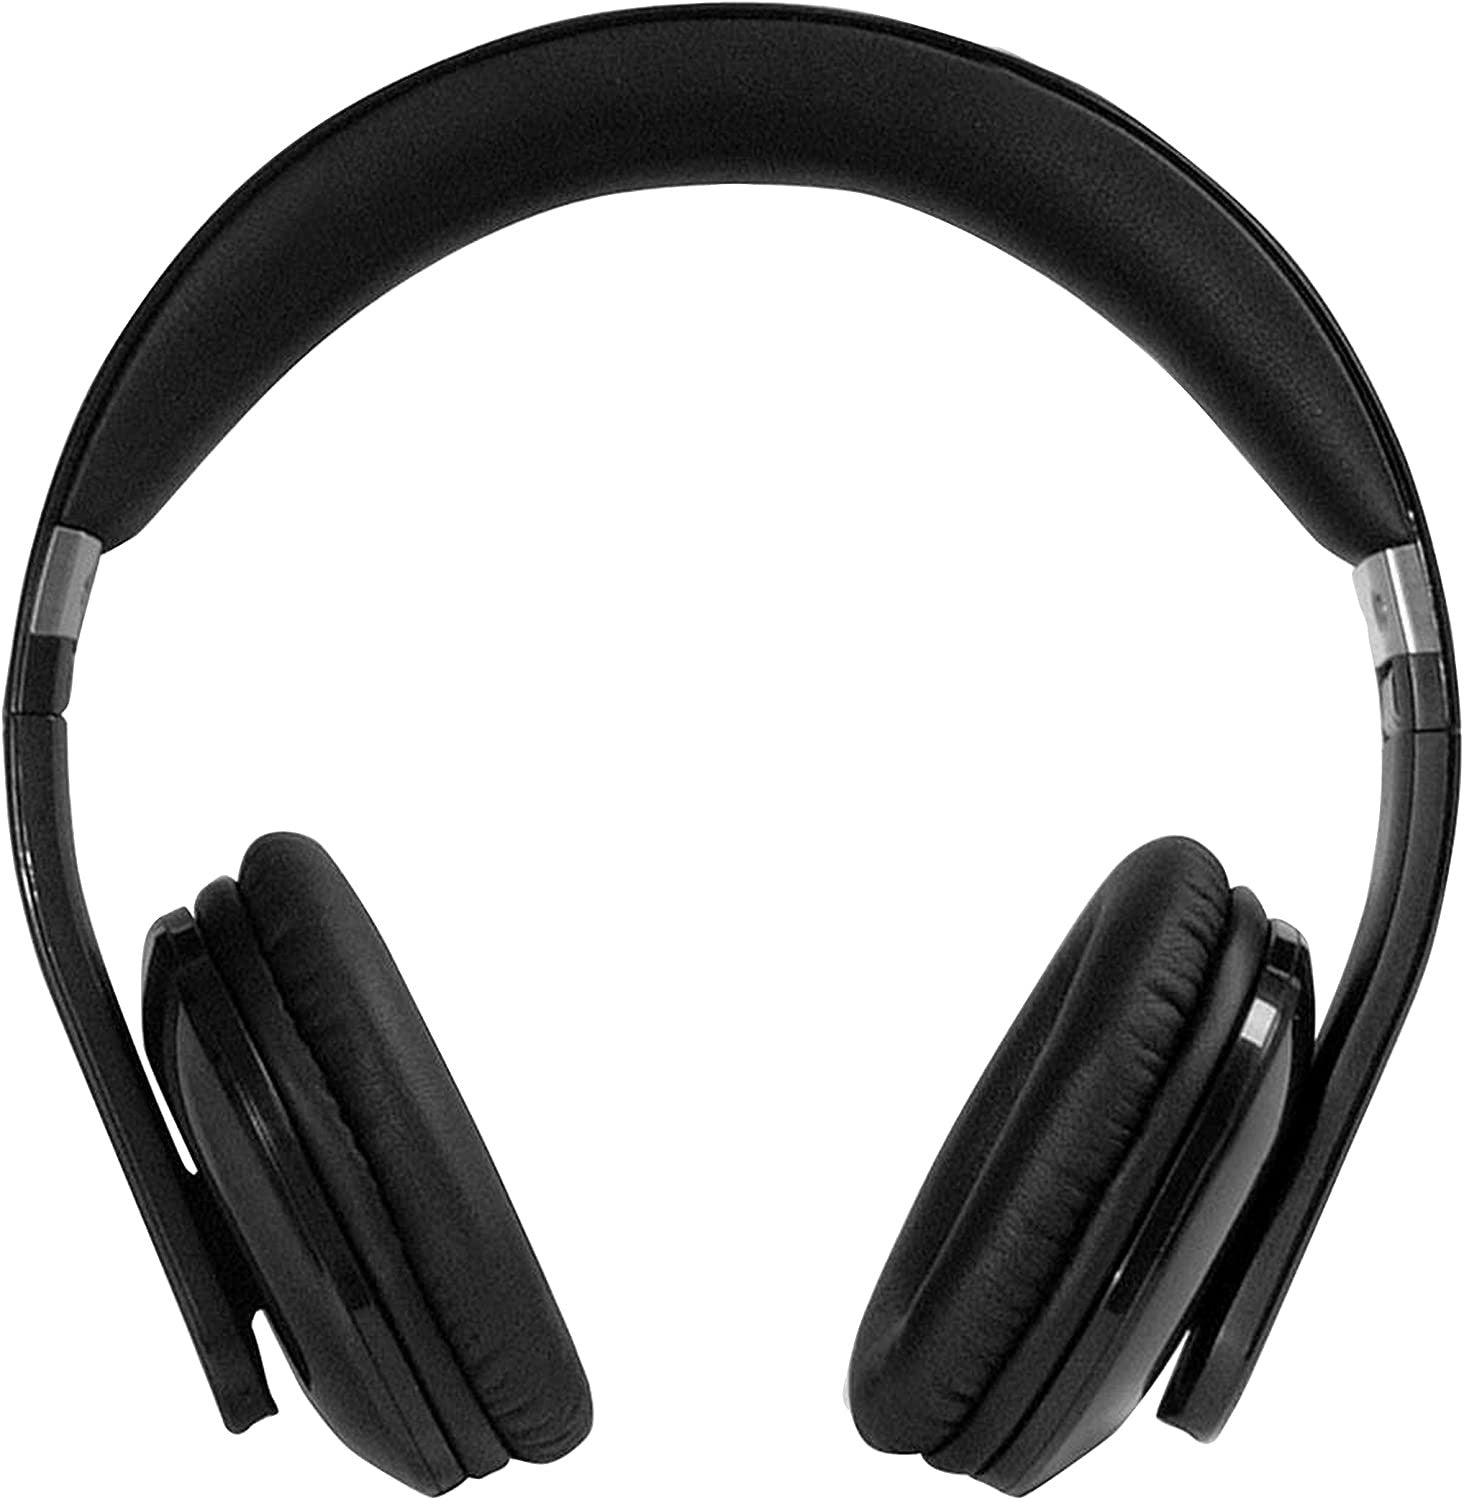 BH4500 Dual-Mode Bluetooth Stereo Headphones